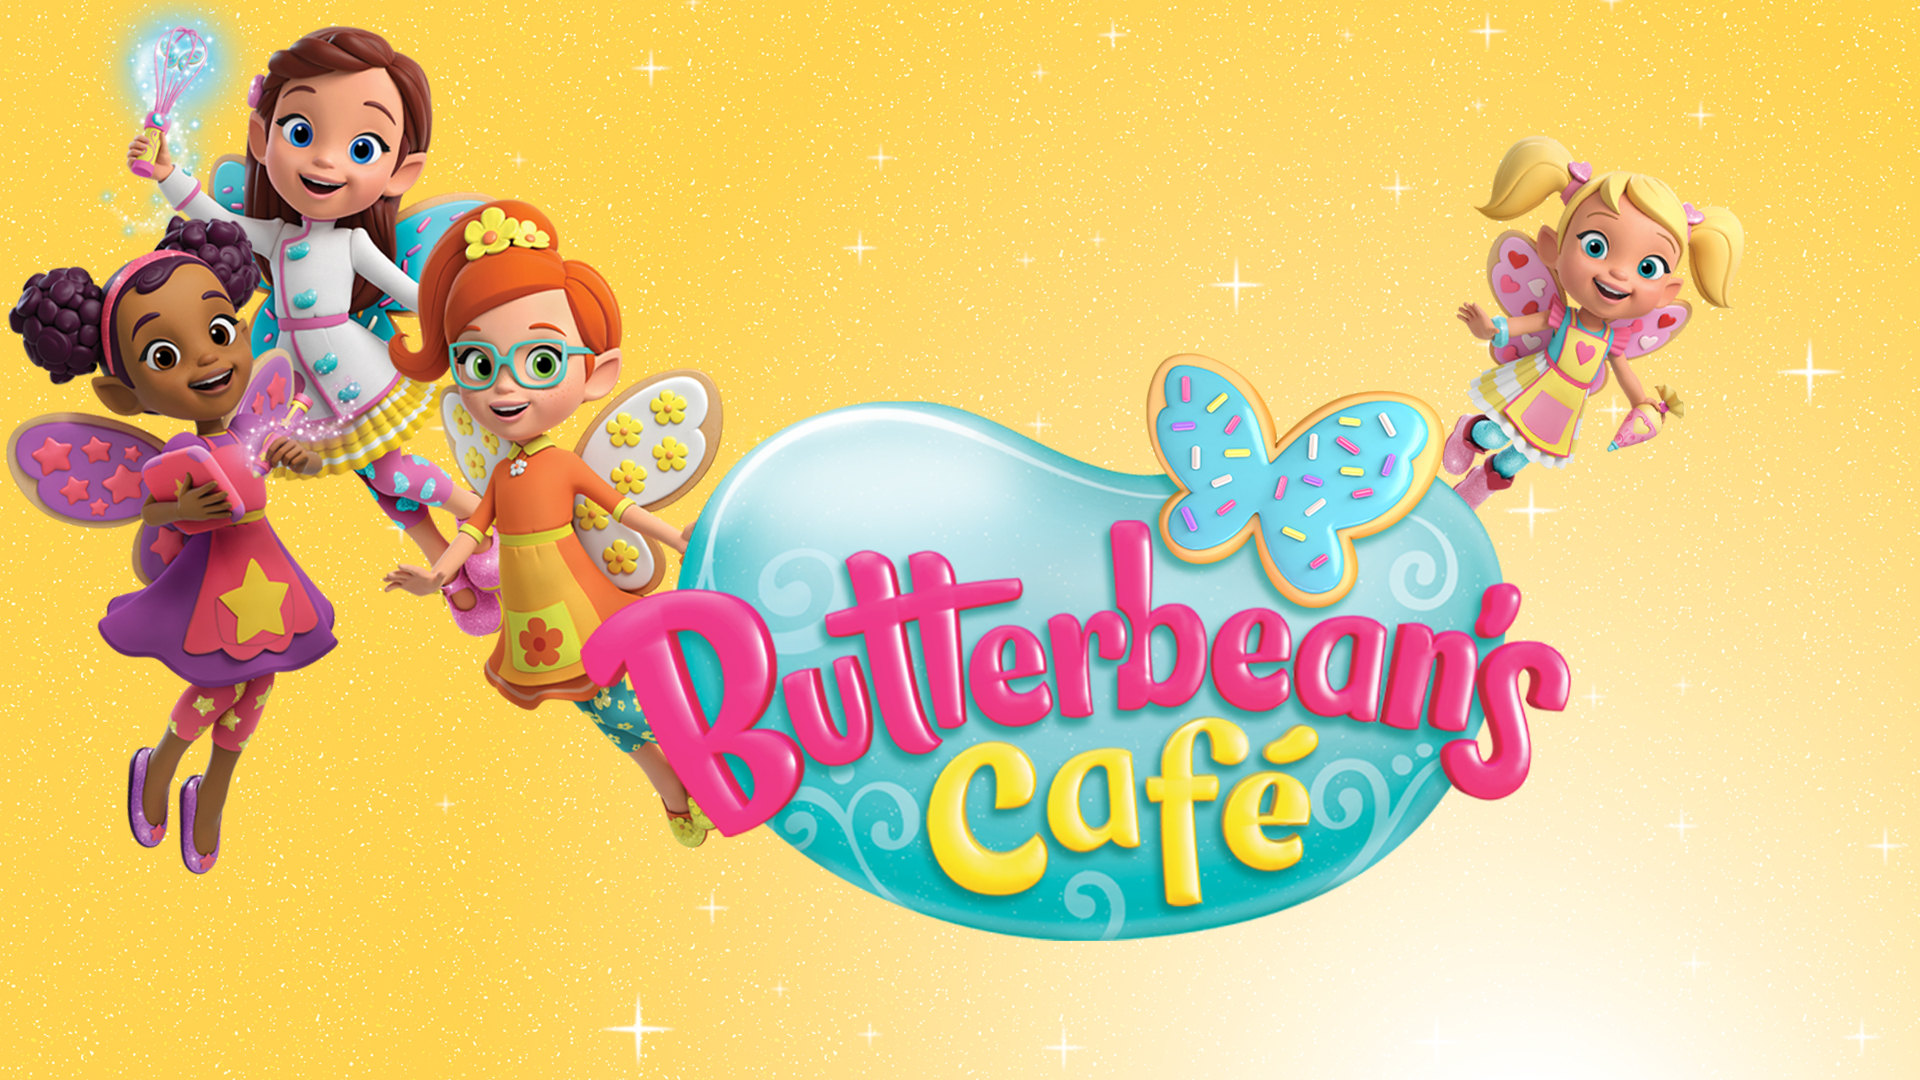 Watch Butterbean's Cafe Online Full Episodes